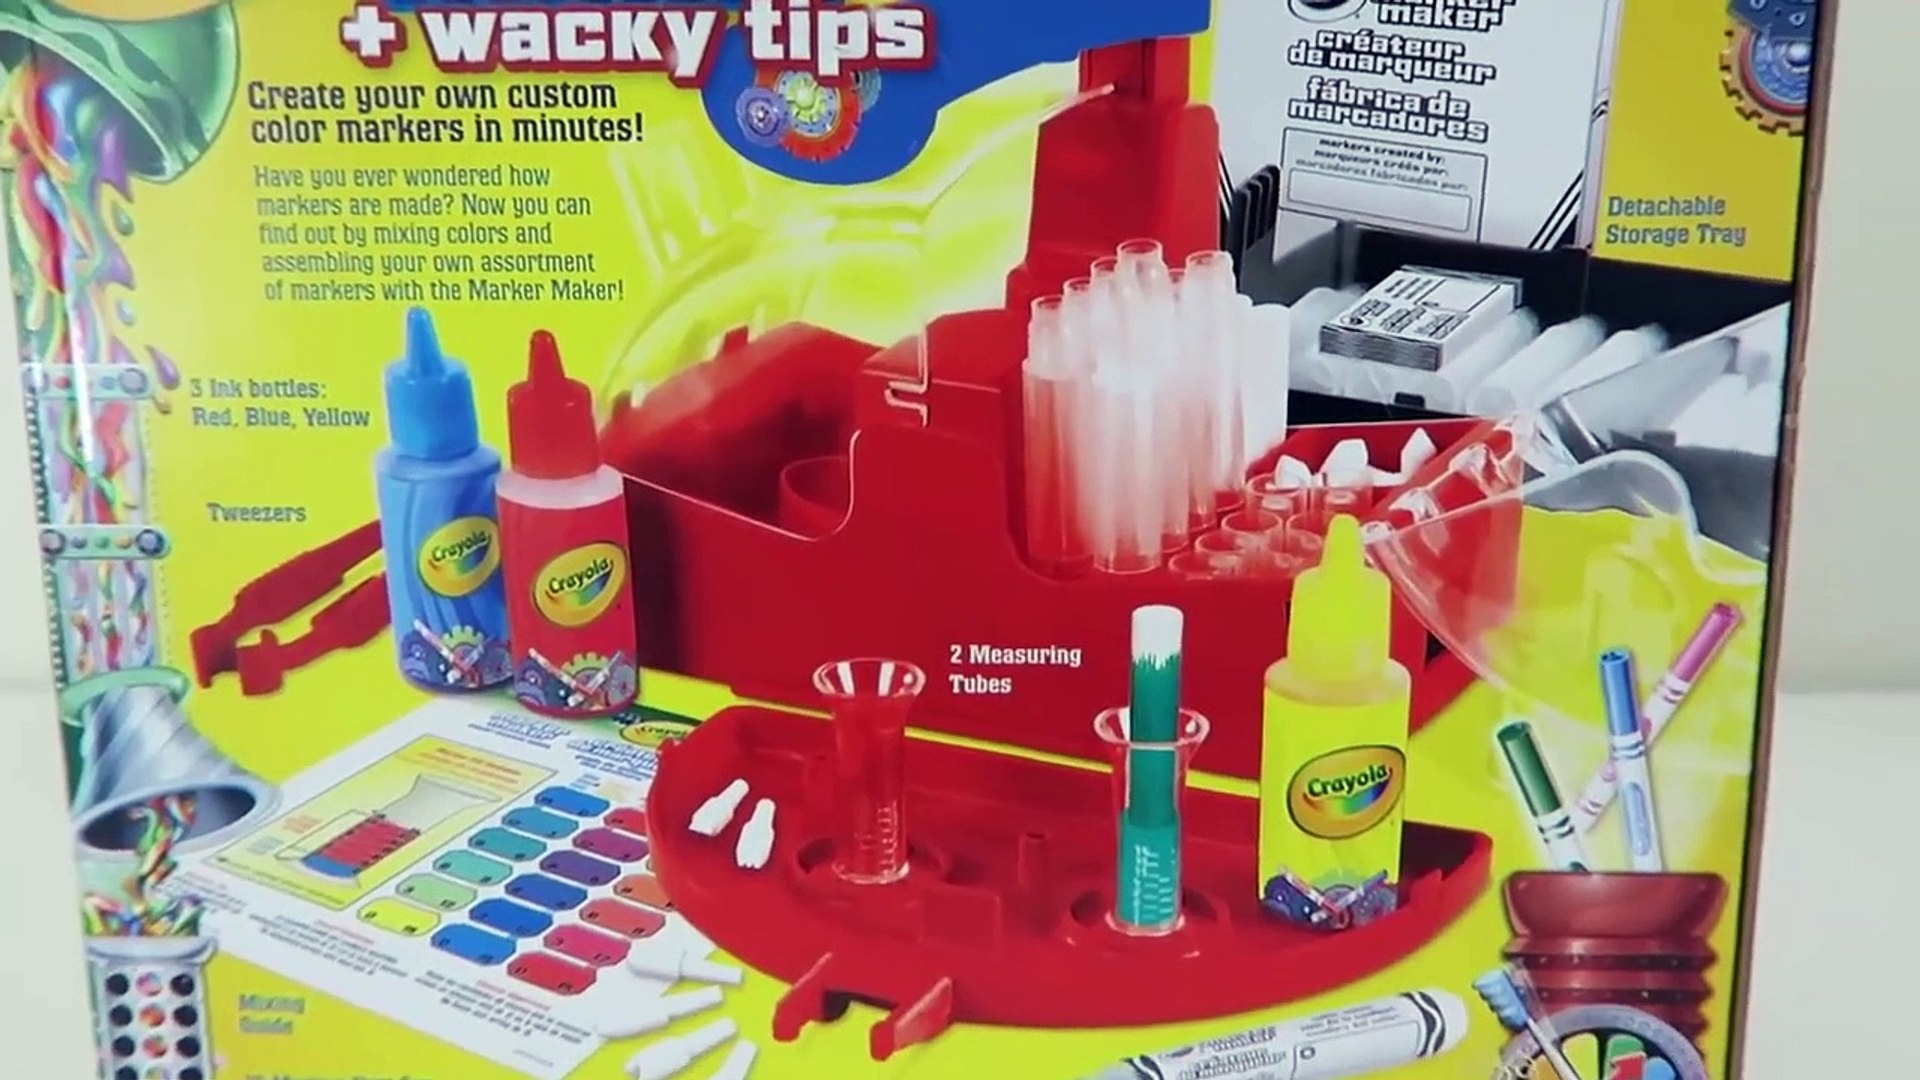 Crayola Marker Maker Play Kit! Make Custom Colored Markers